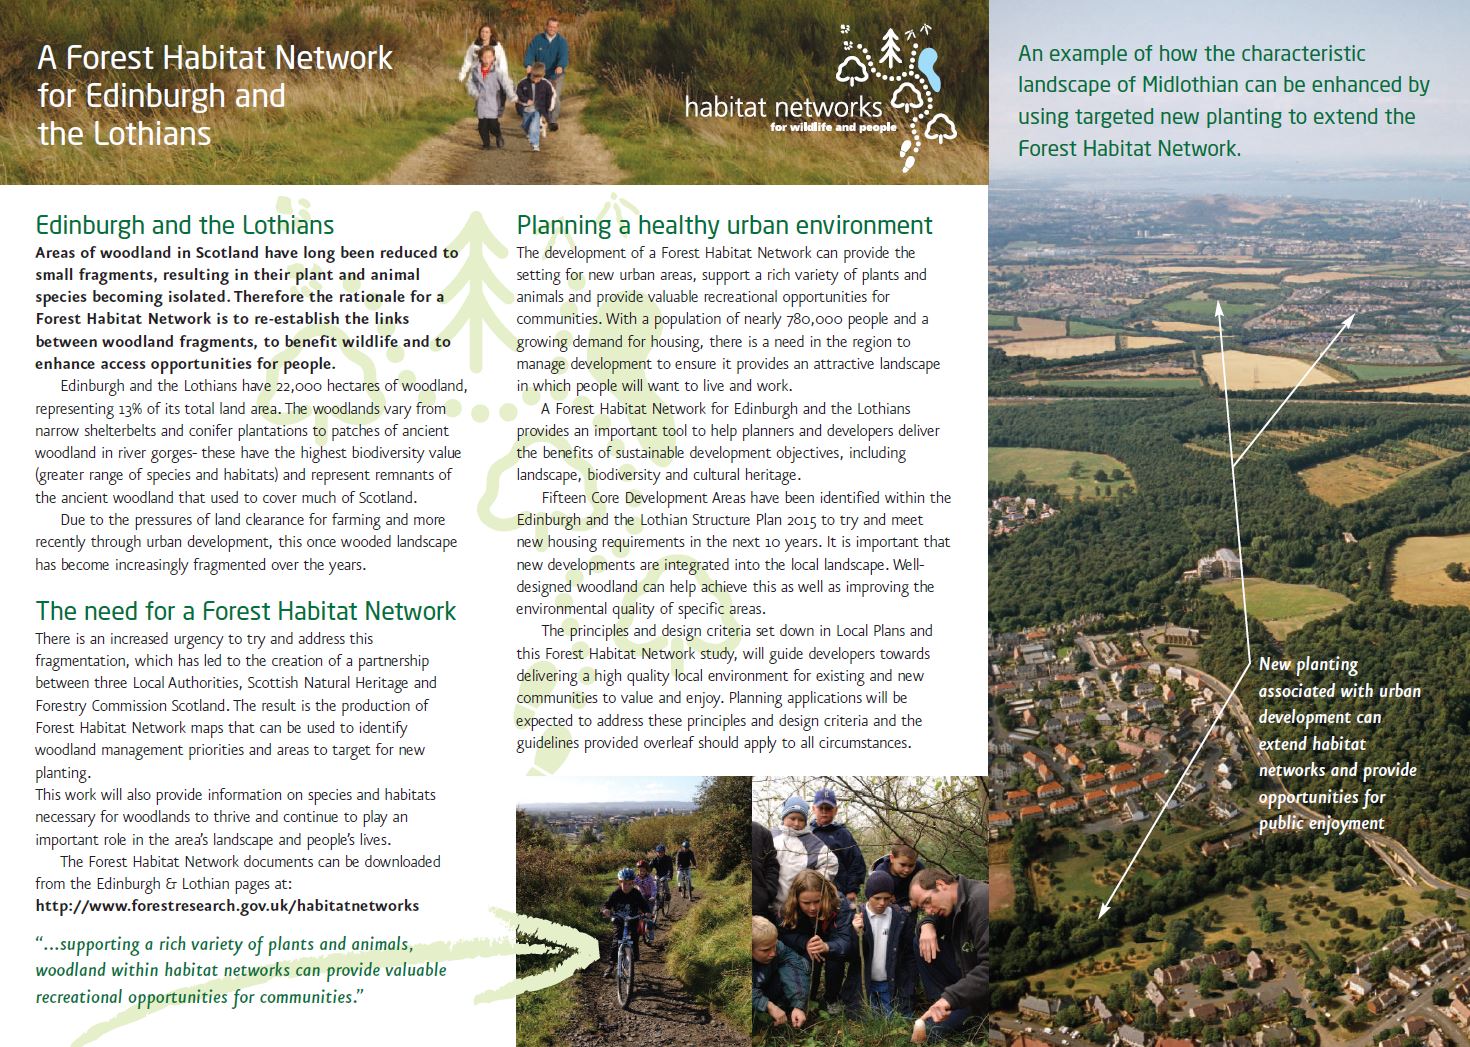 A Forest Habitat Network for Edinburgh and Lothians